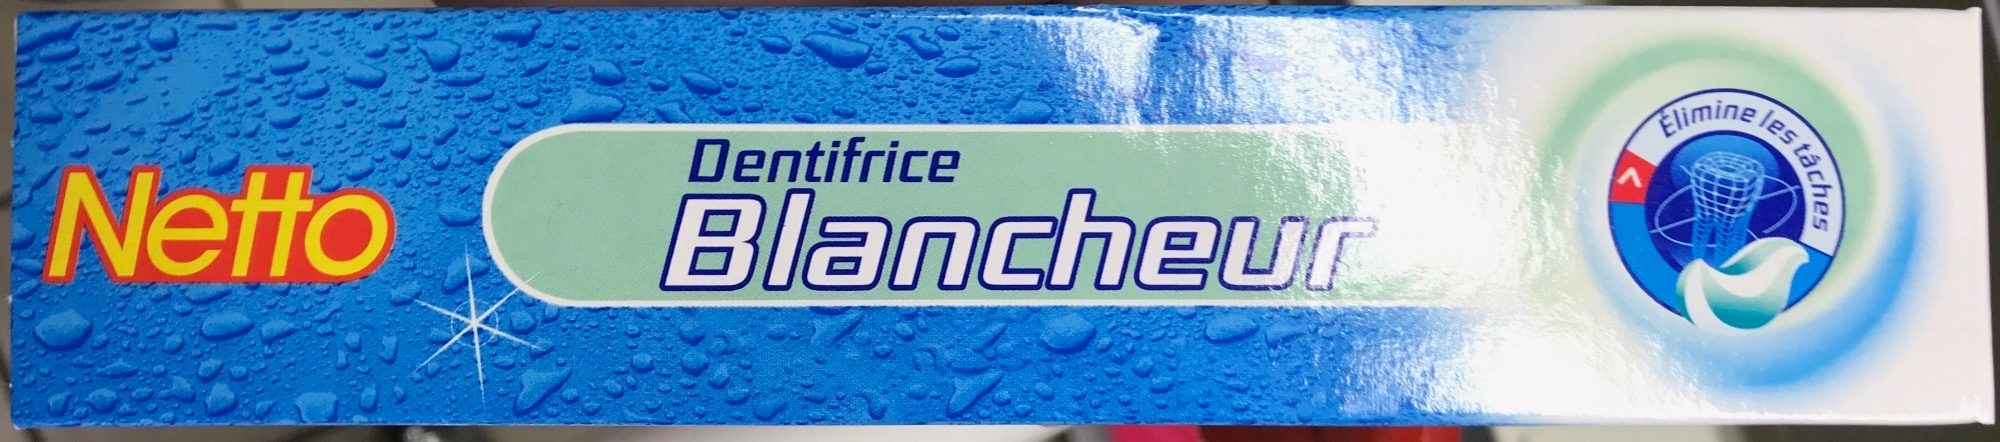 Dentifrice Blancheur - Produit - fr